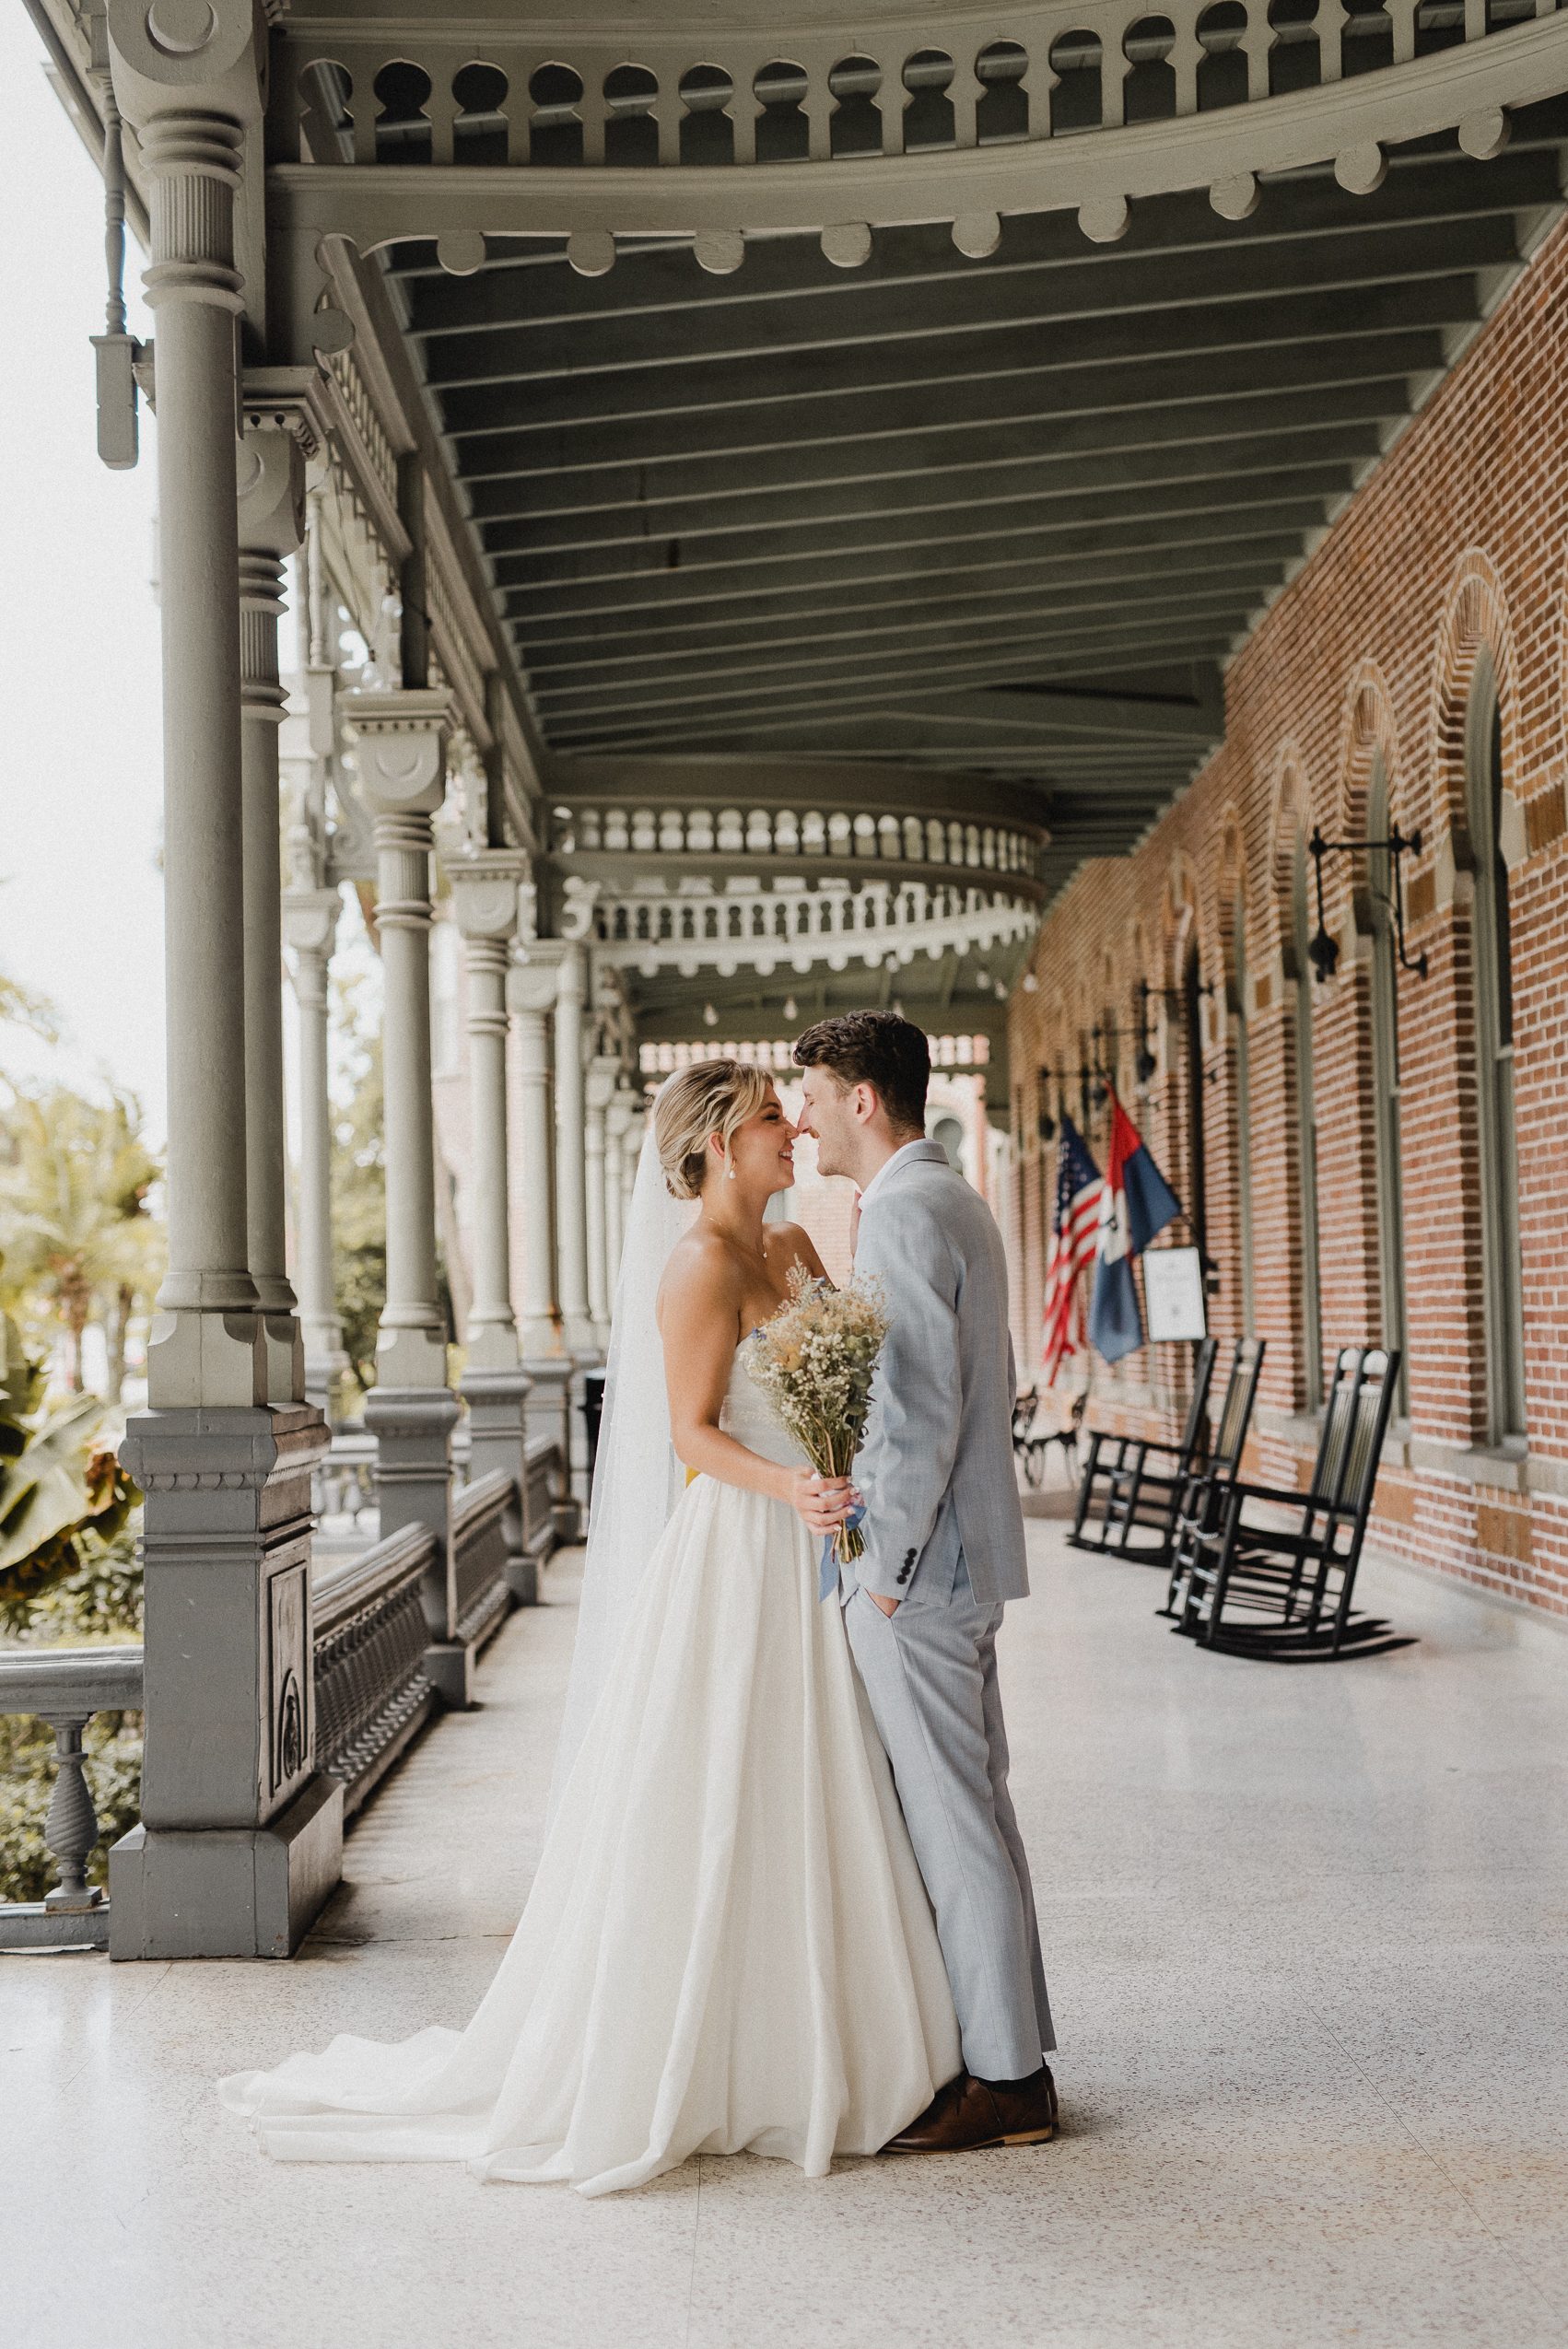 Florida Georgia Couples, Proposal, Anniversary, Engagement, Destination Elopement and Intimate Wedding Photographer Orlando Local St Augustine